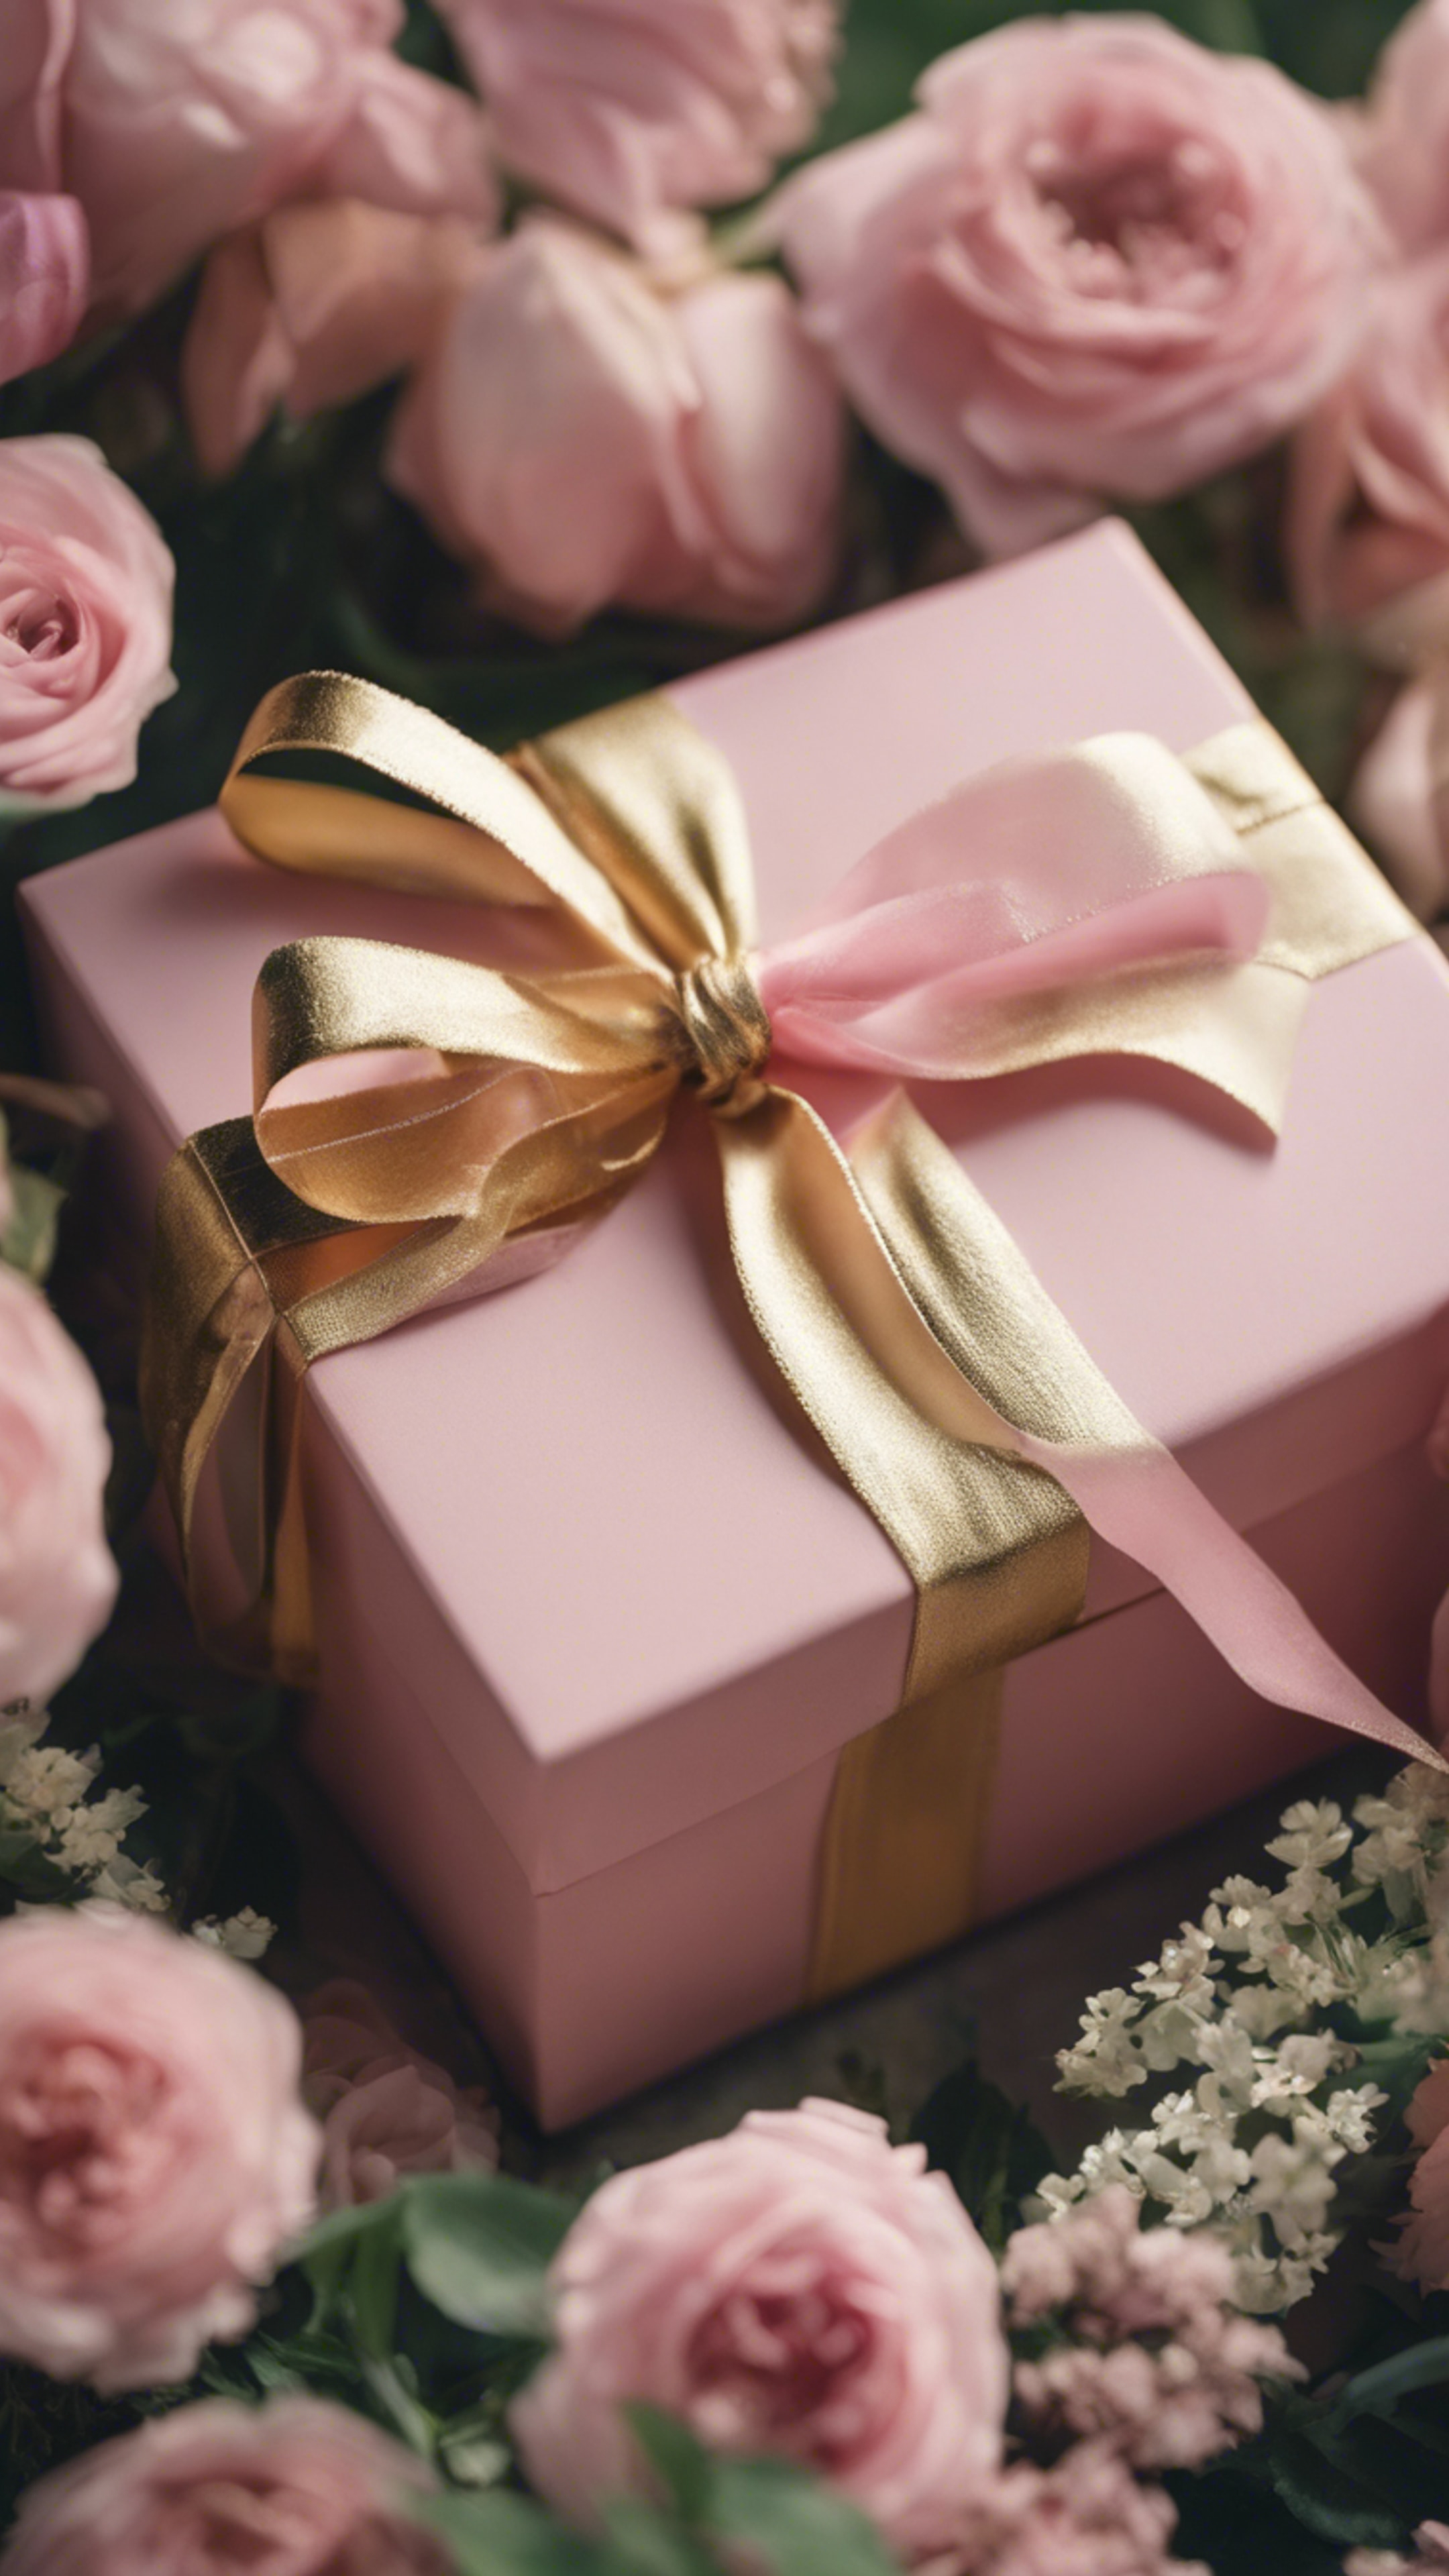 A gold-ribboned pink gift box nestled amongst flowers and greenery. Divar kağızı[057f26c1d4b14d2a96a8]